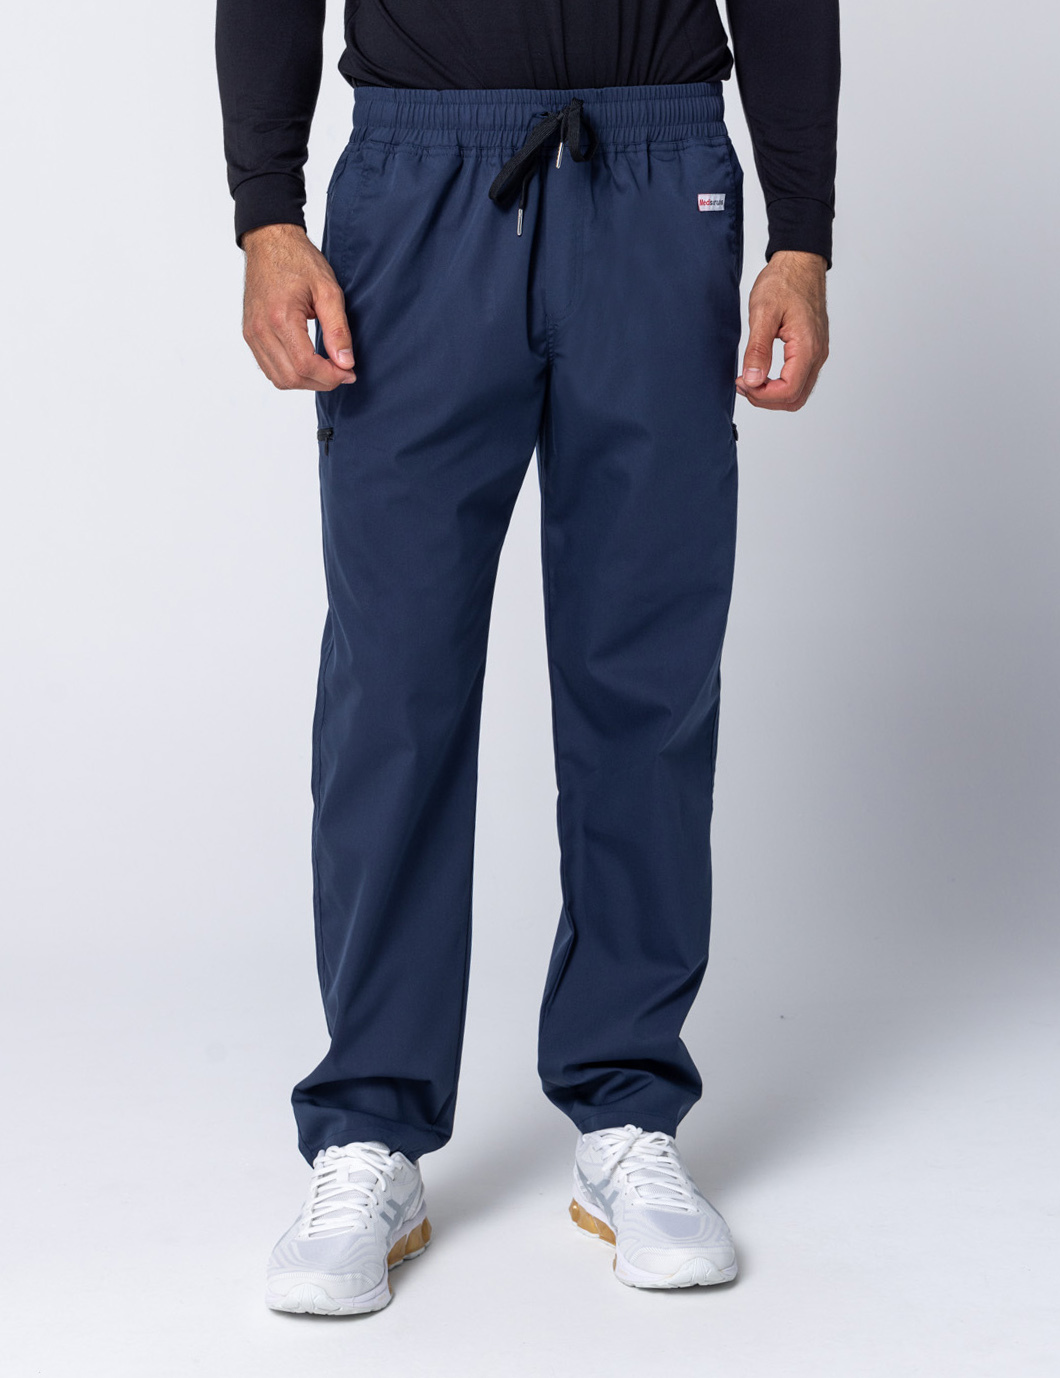 Men's Utility Pants - Navy - 2X Large